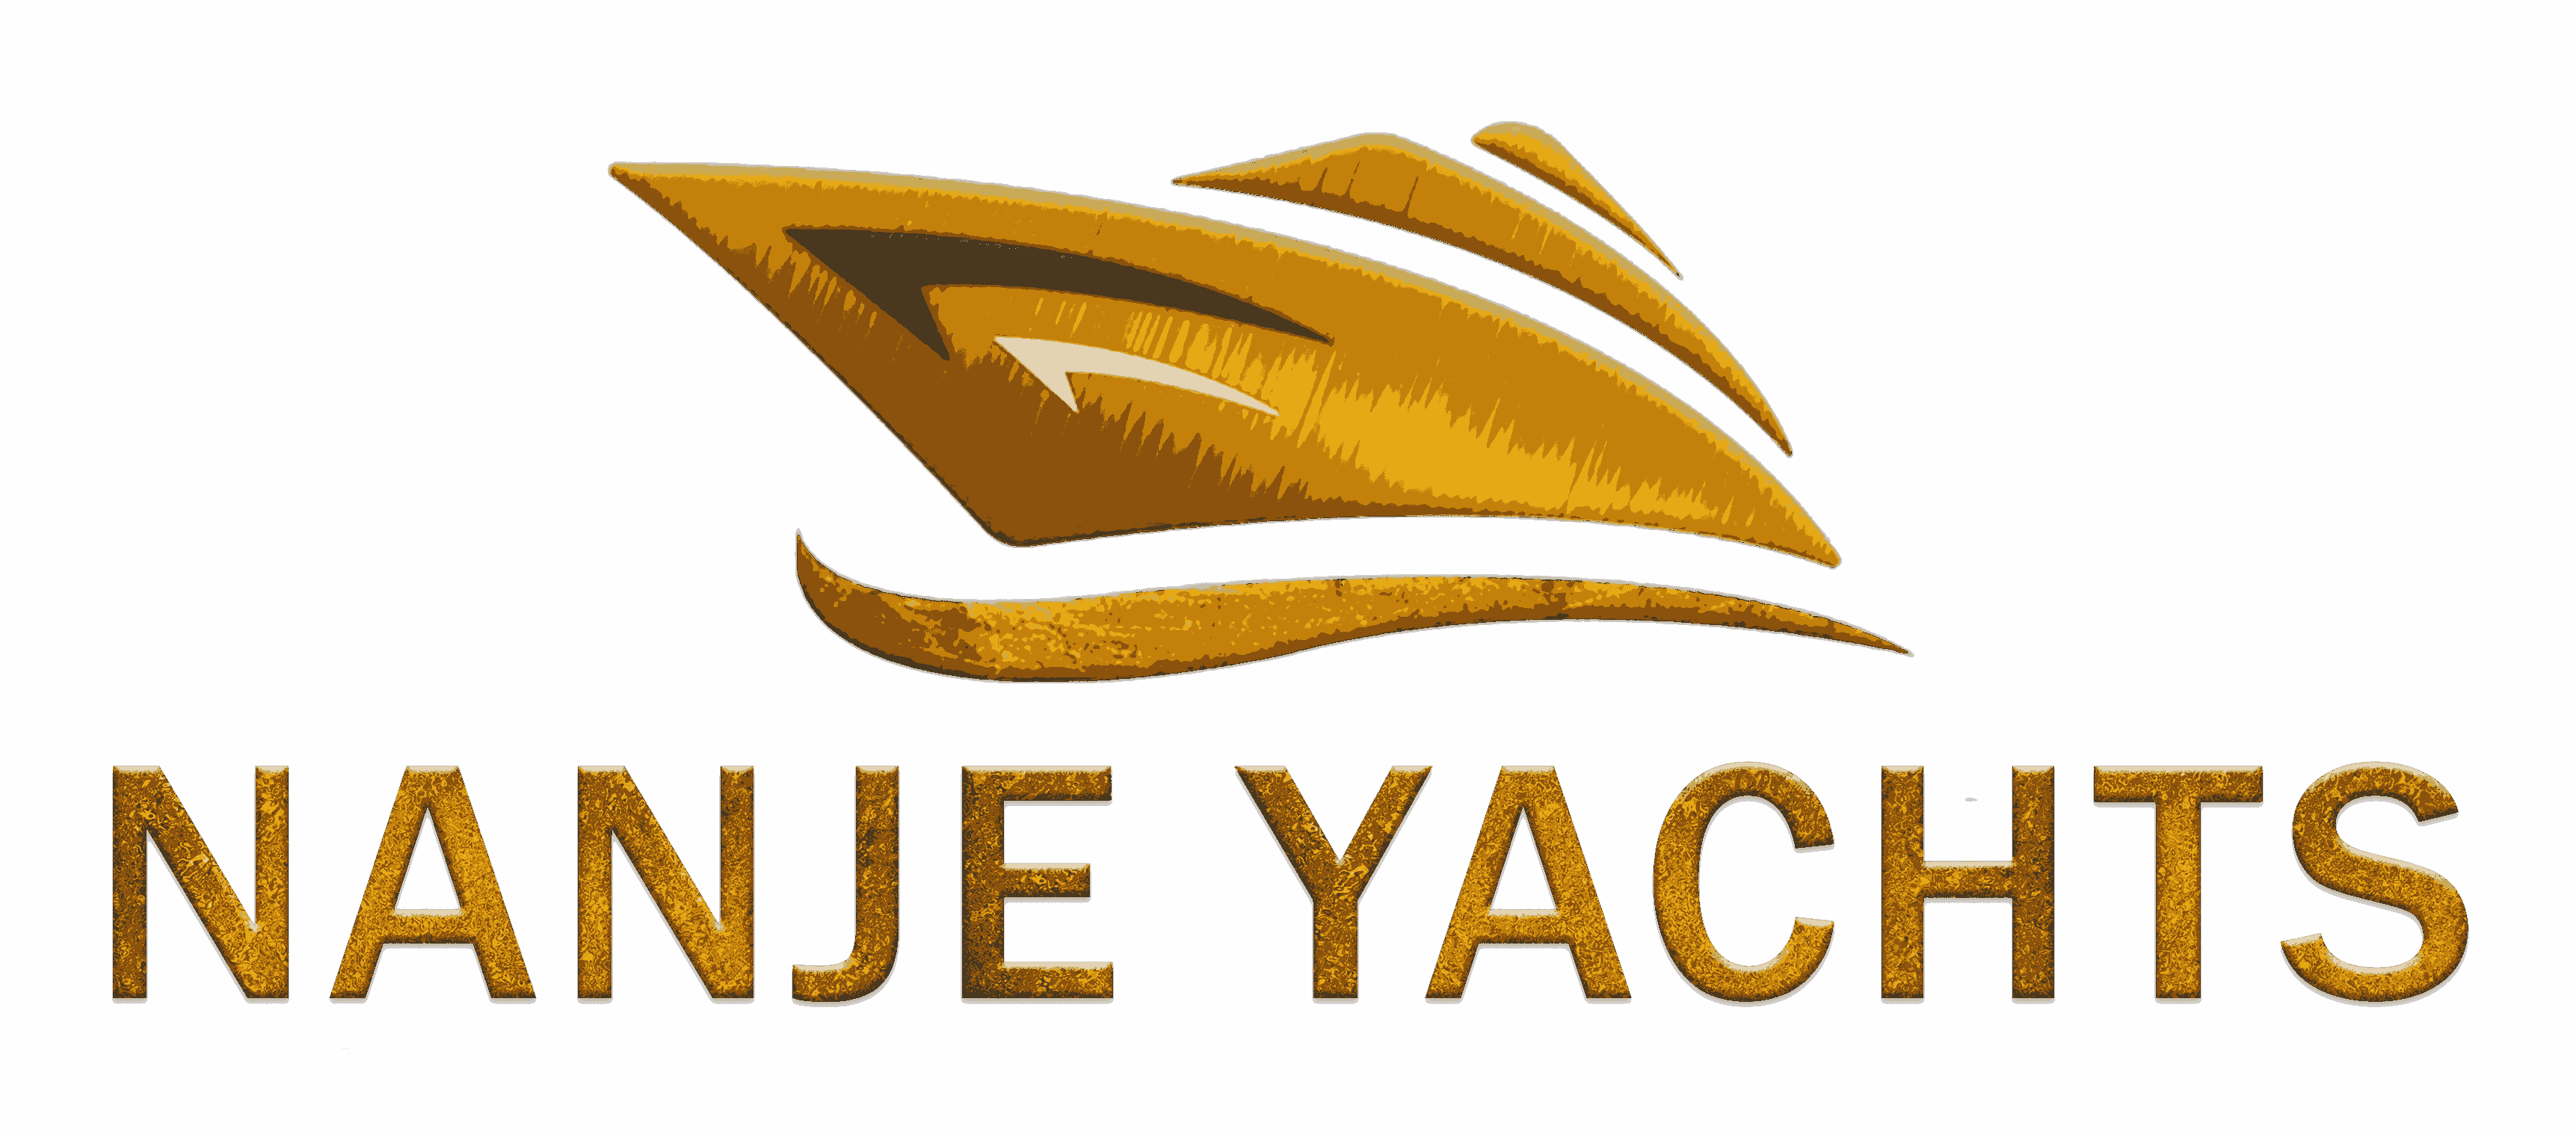 Rental Yacht Dubai